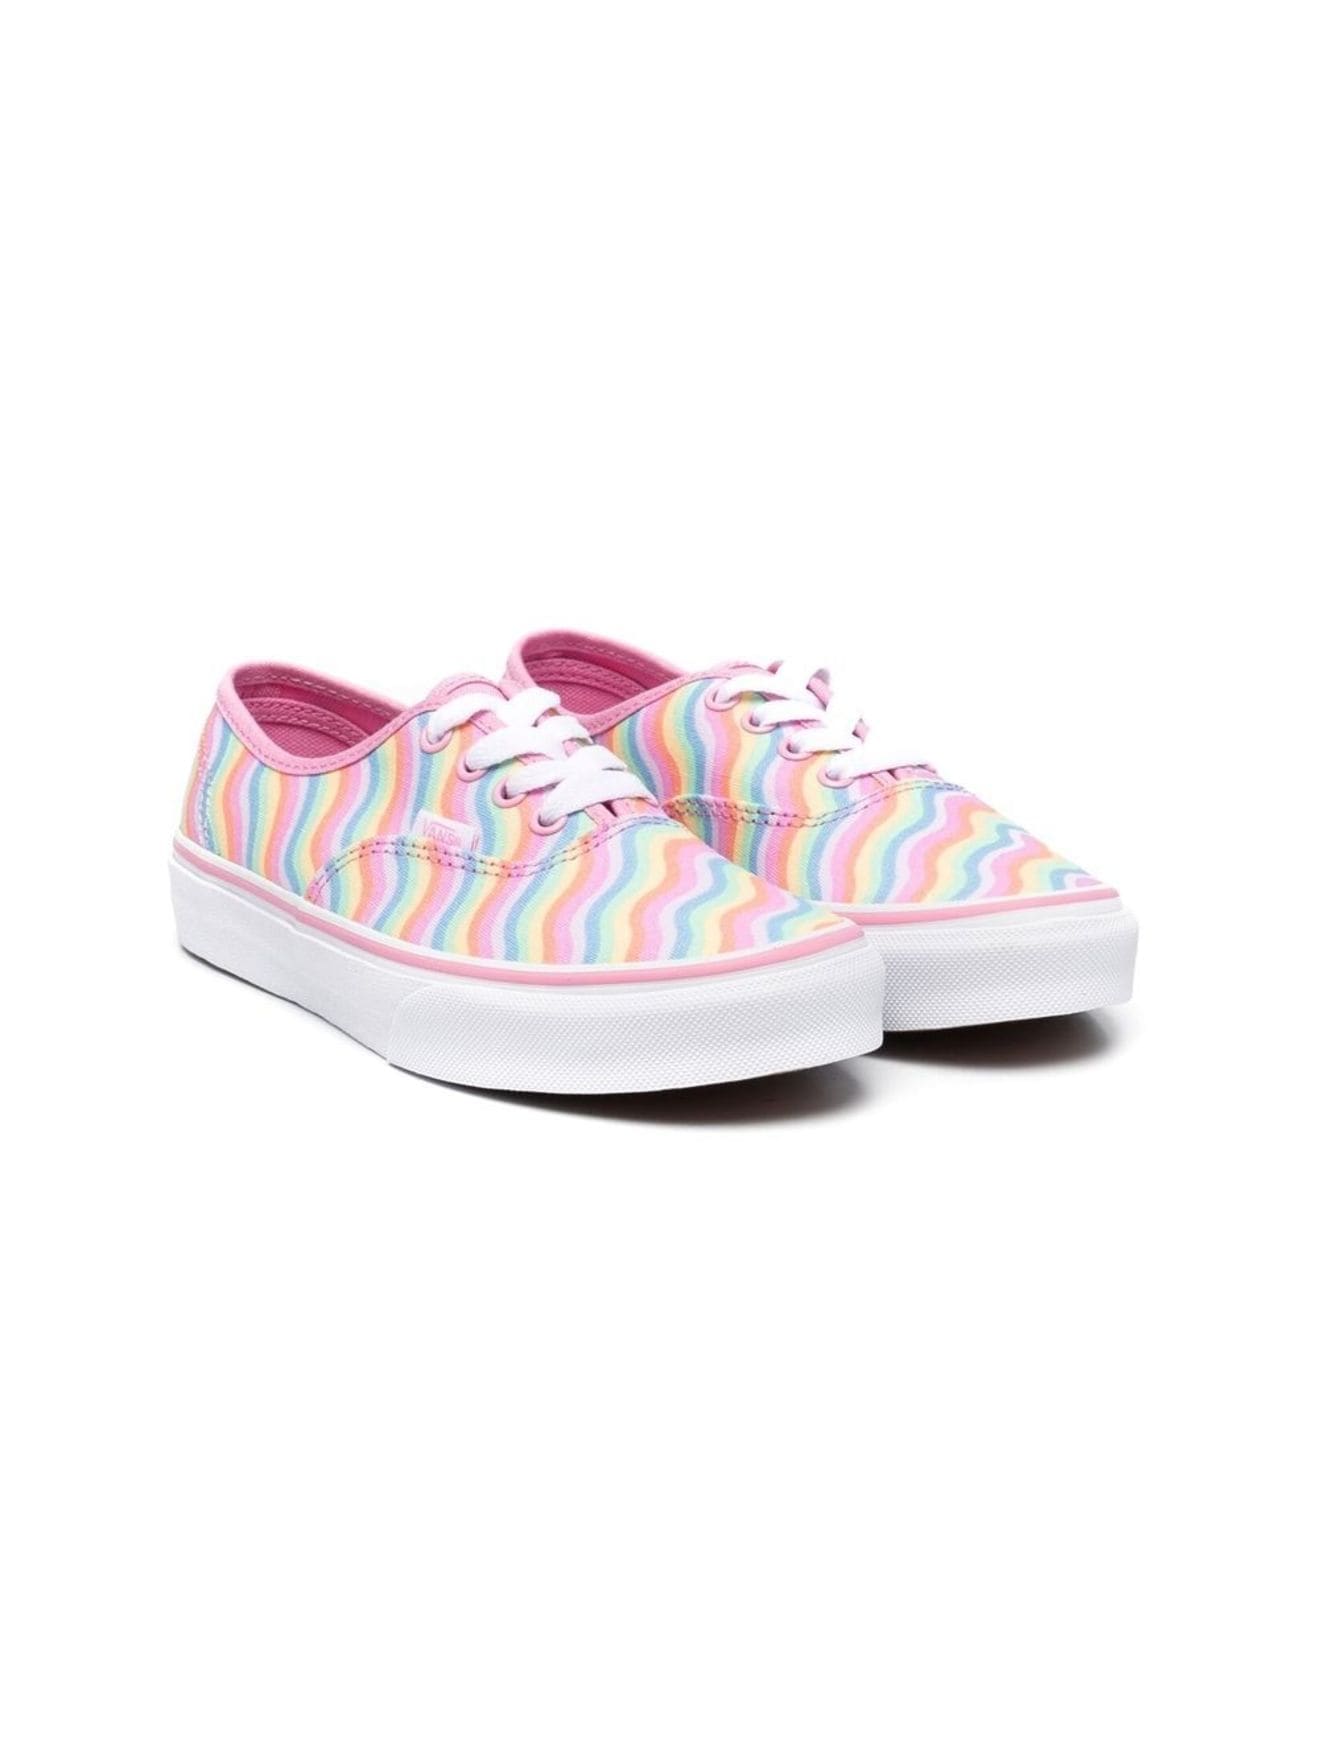 Sale Vans Kids Wavy Rainbow low-top sneakers pink | MODES